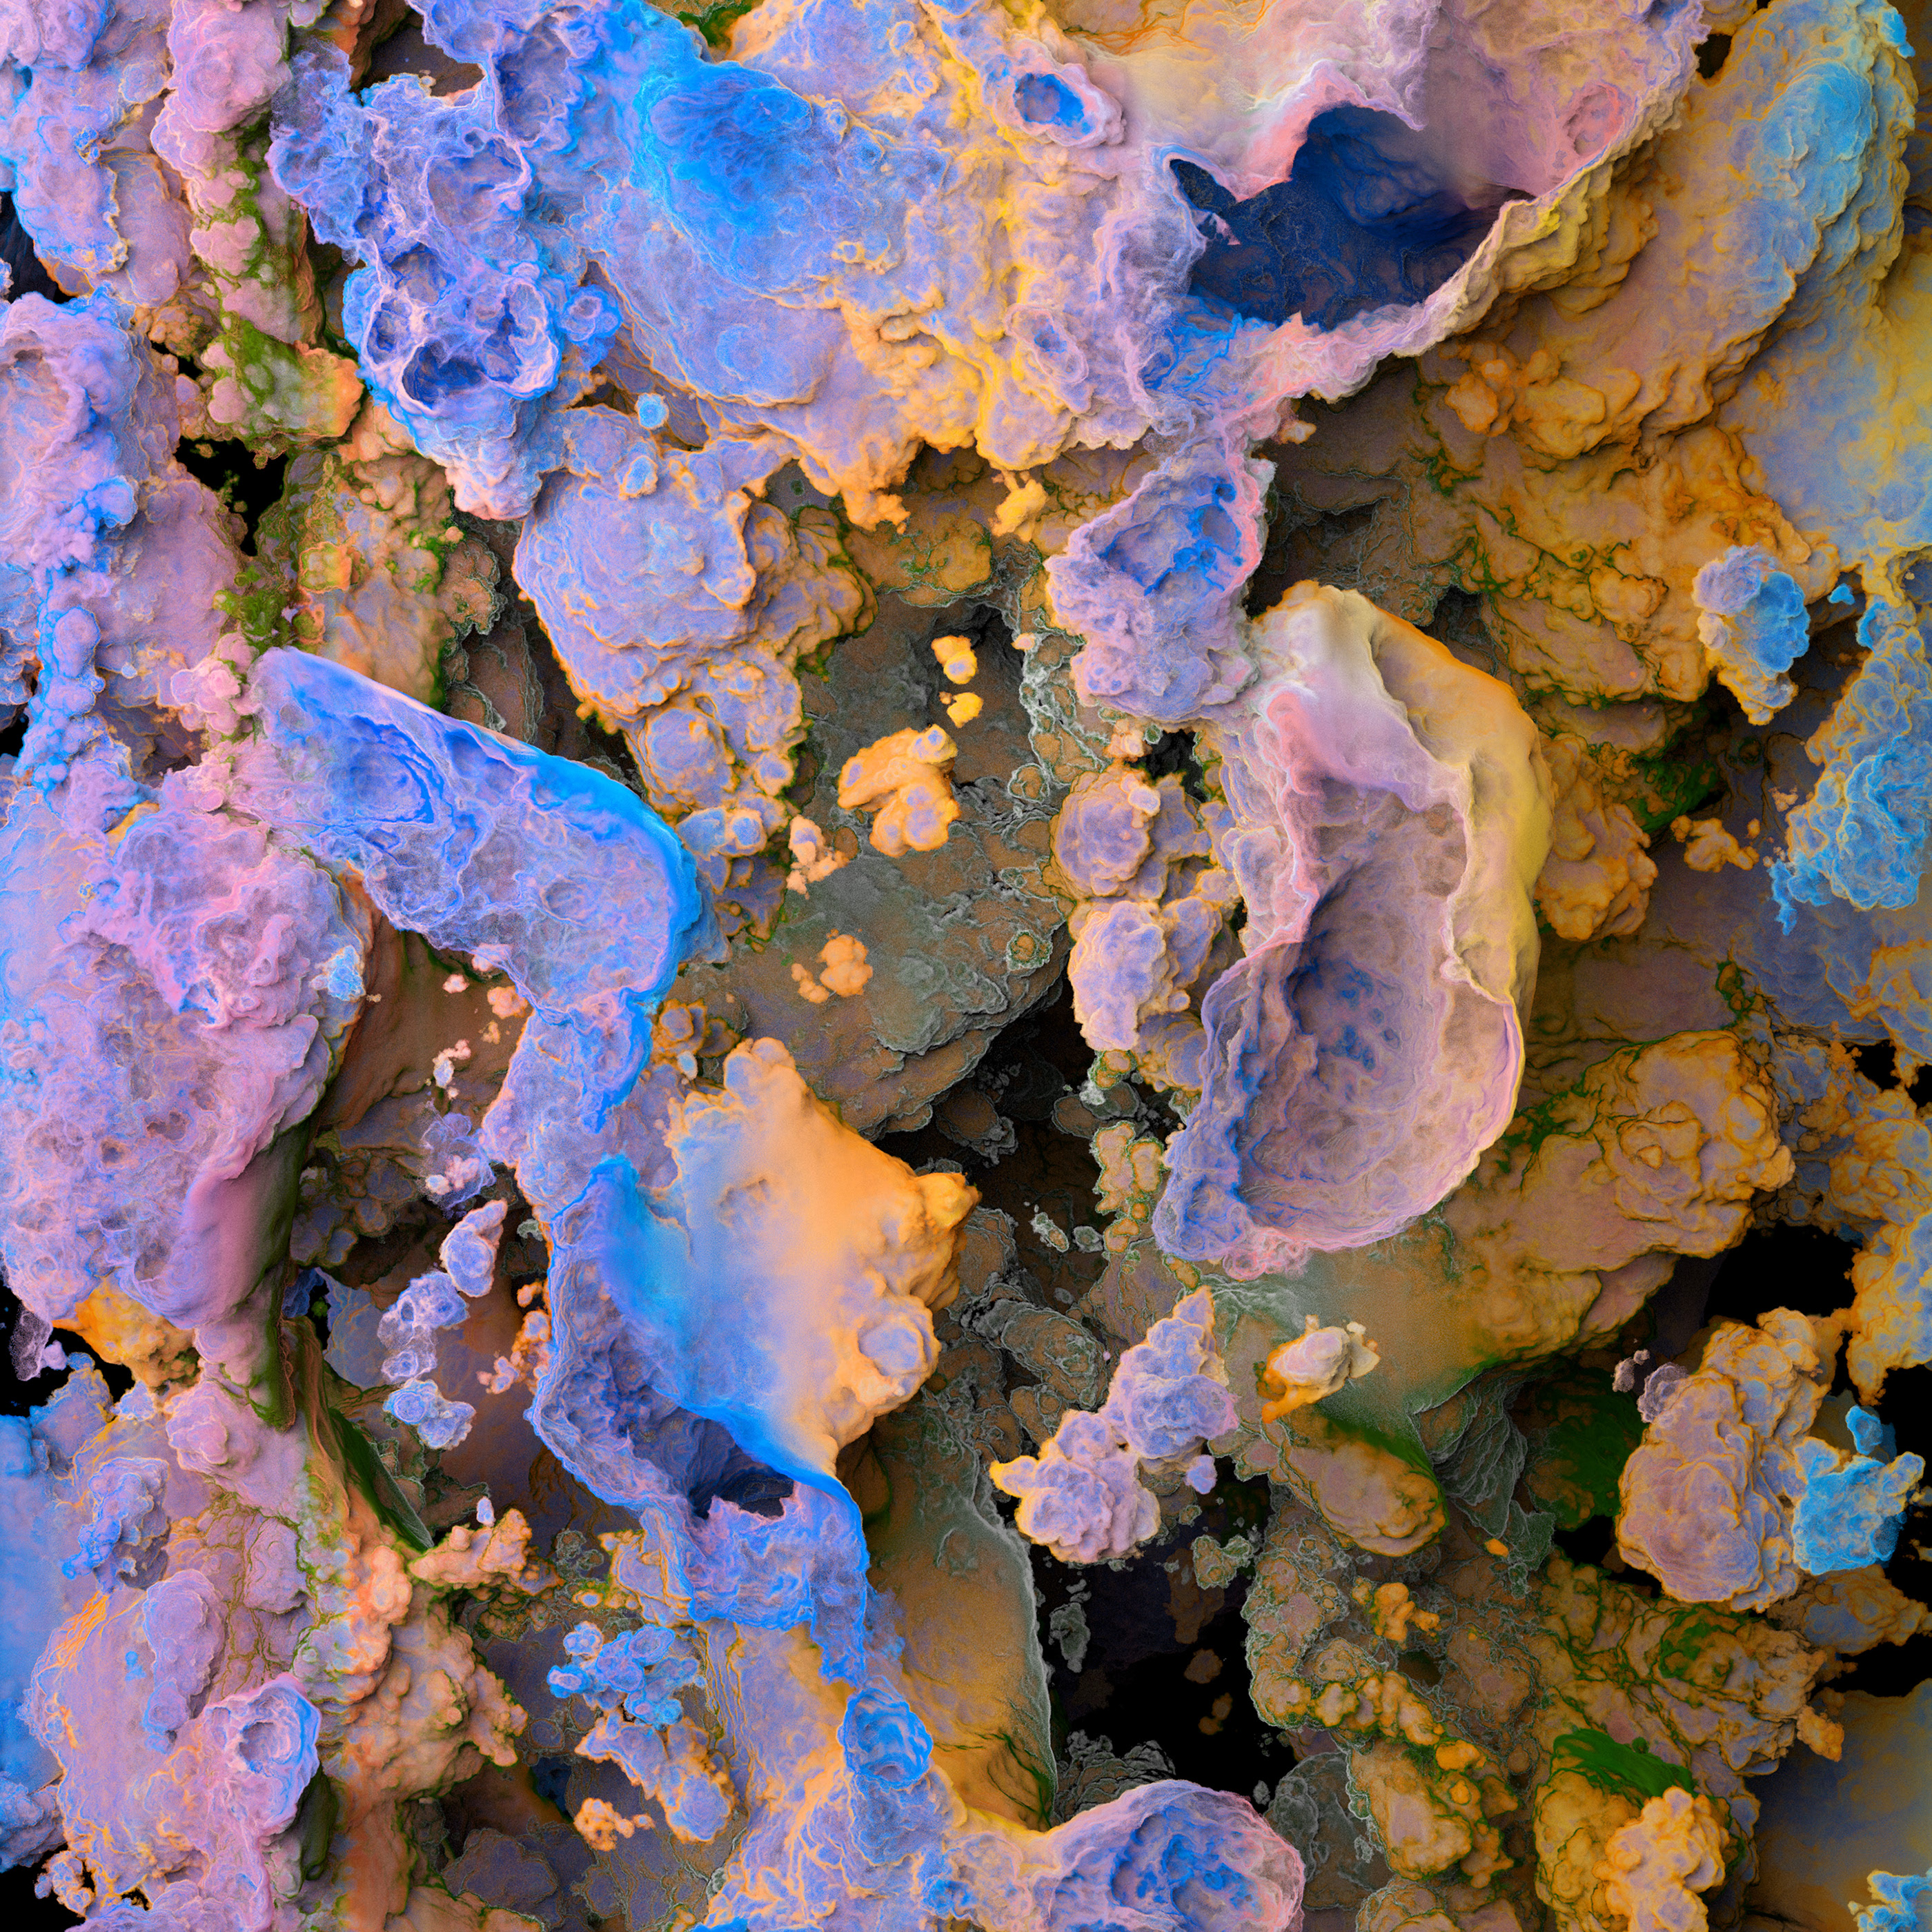 Colorful mold on Behanceb9ca6c82913747.5d2c890c67ddf.jpg